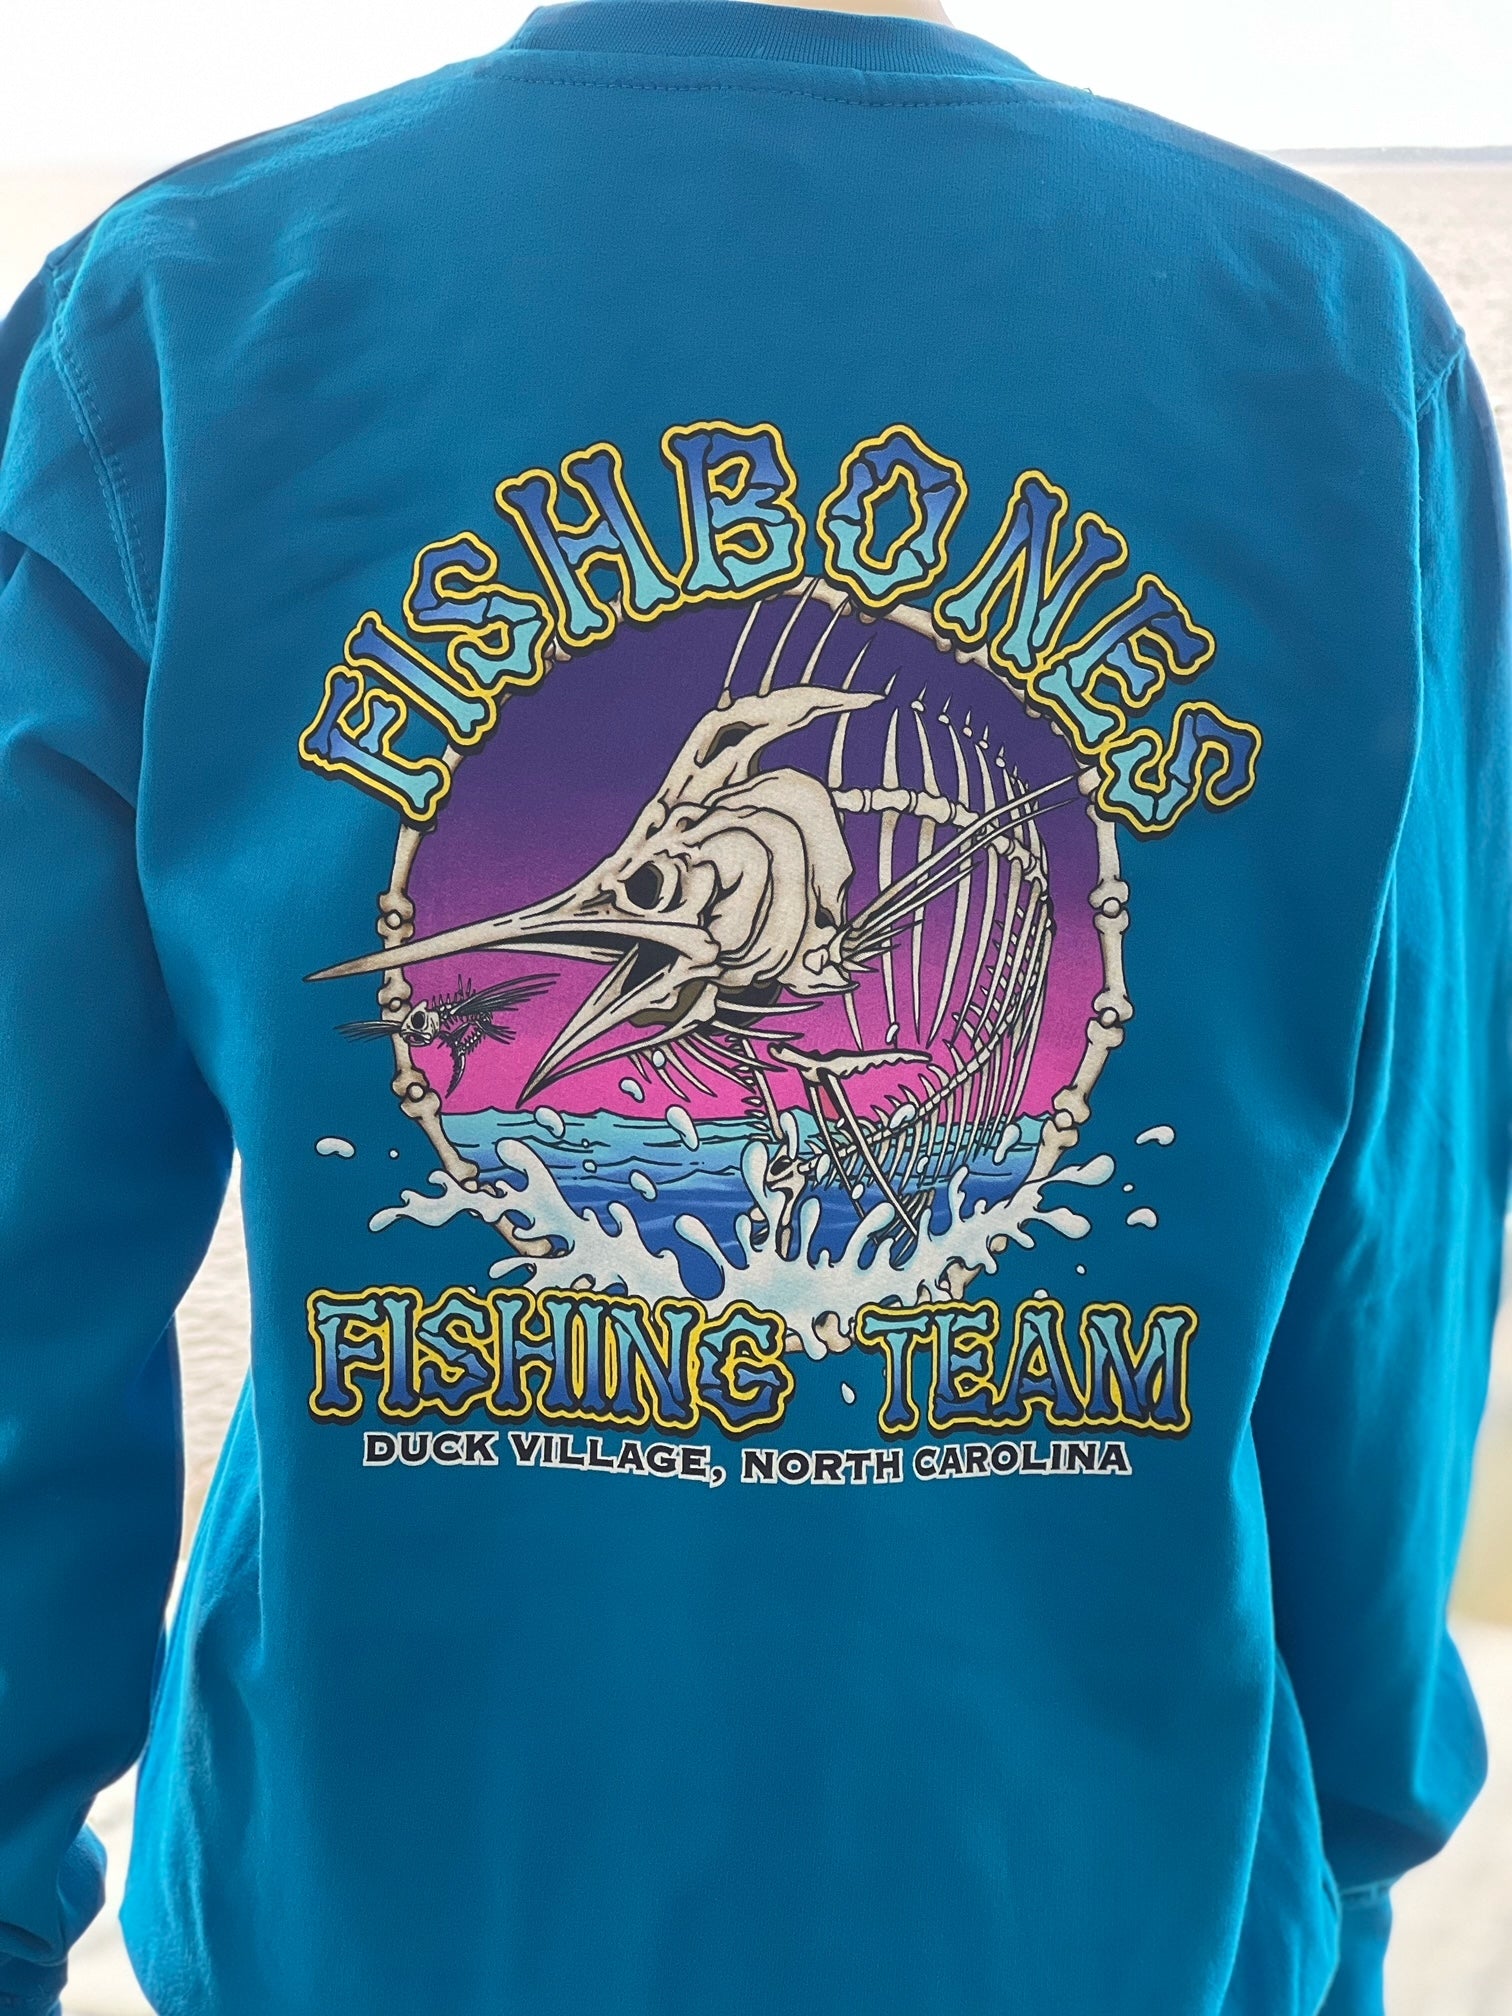 Fishing Team Sweatshirt – Fishbones Raw Bar and Restaurant